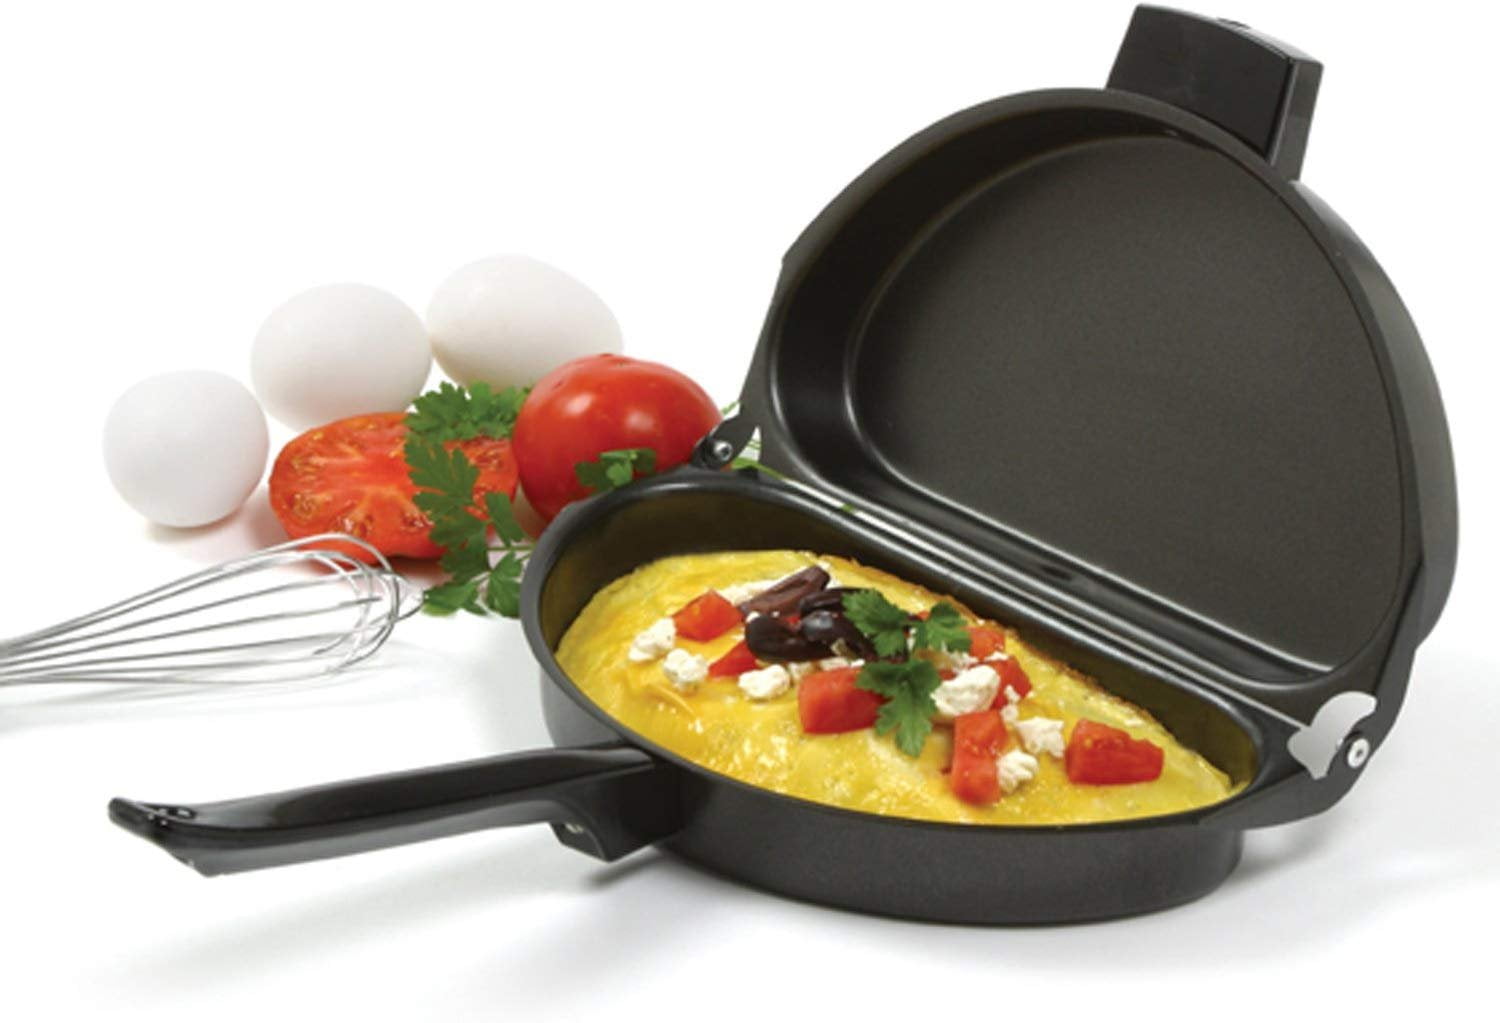 Norpro Nonstick Omelet Pan